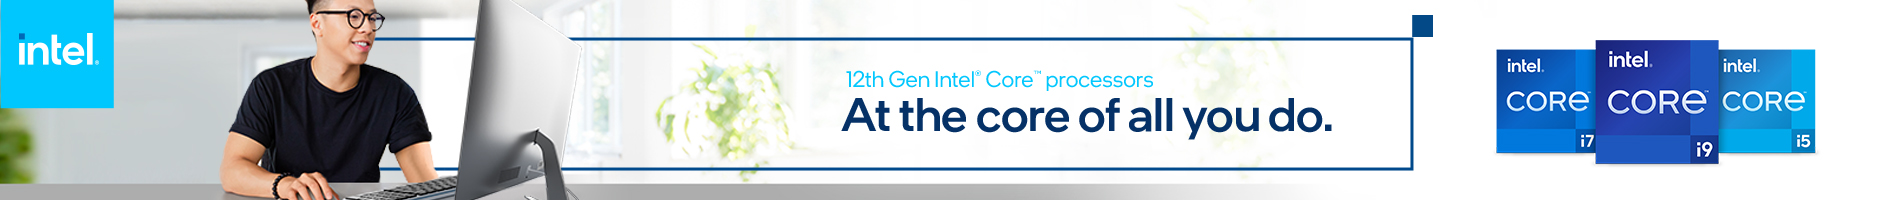 Intel 12thgen Consumer Launch 01.03.btm Banner